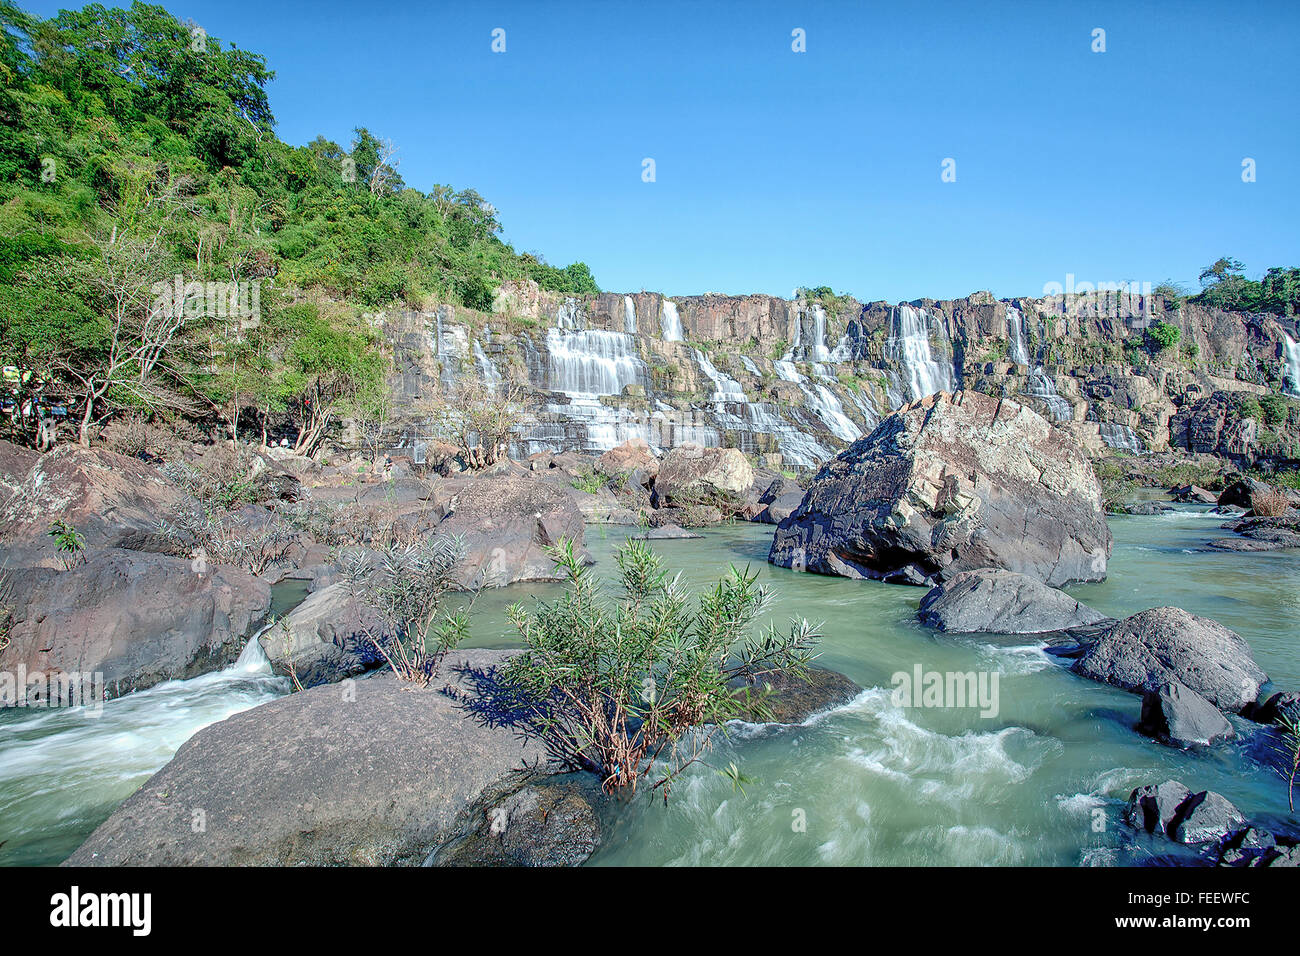 The Pongour or Bongour waterfall near Da Lat city, Vietnam Stock Photo